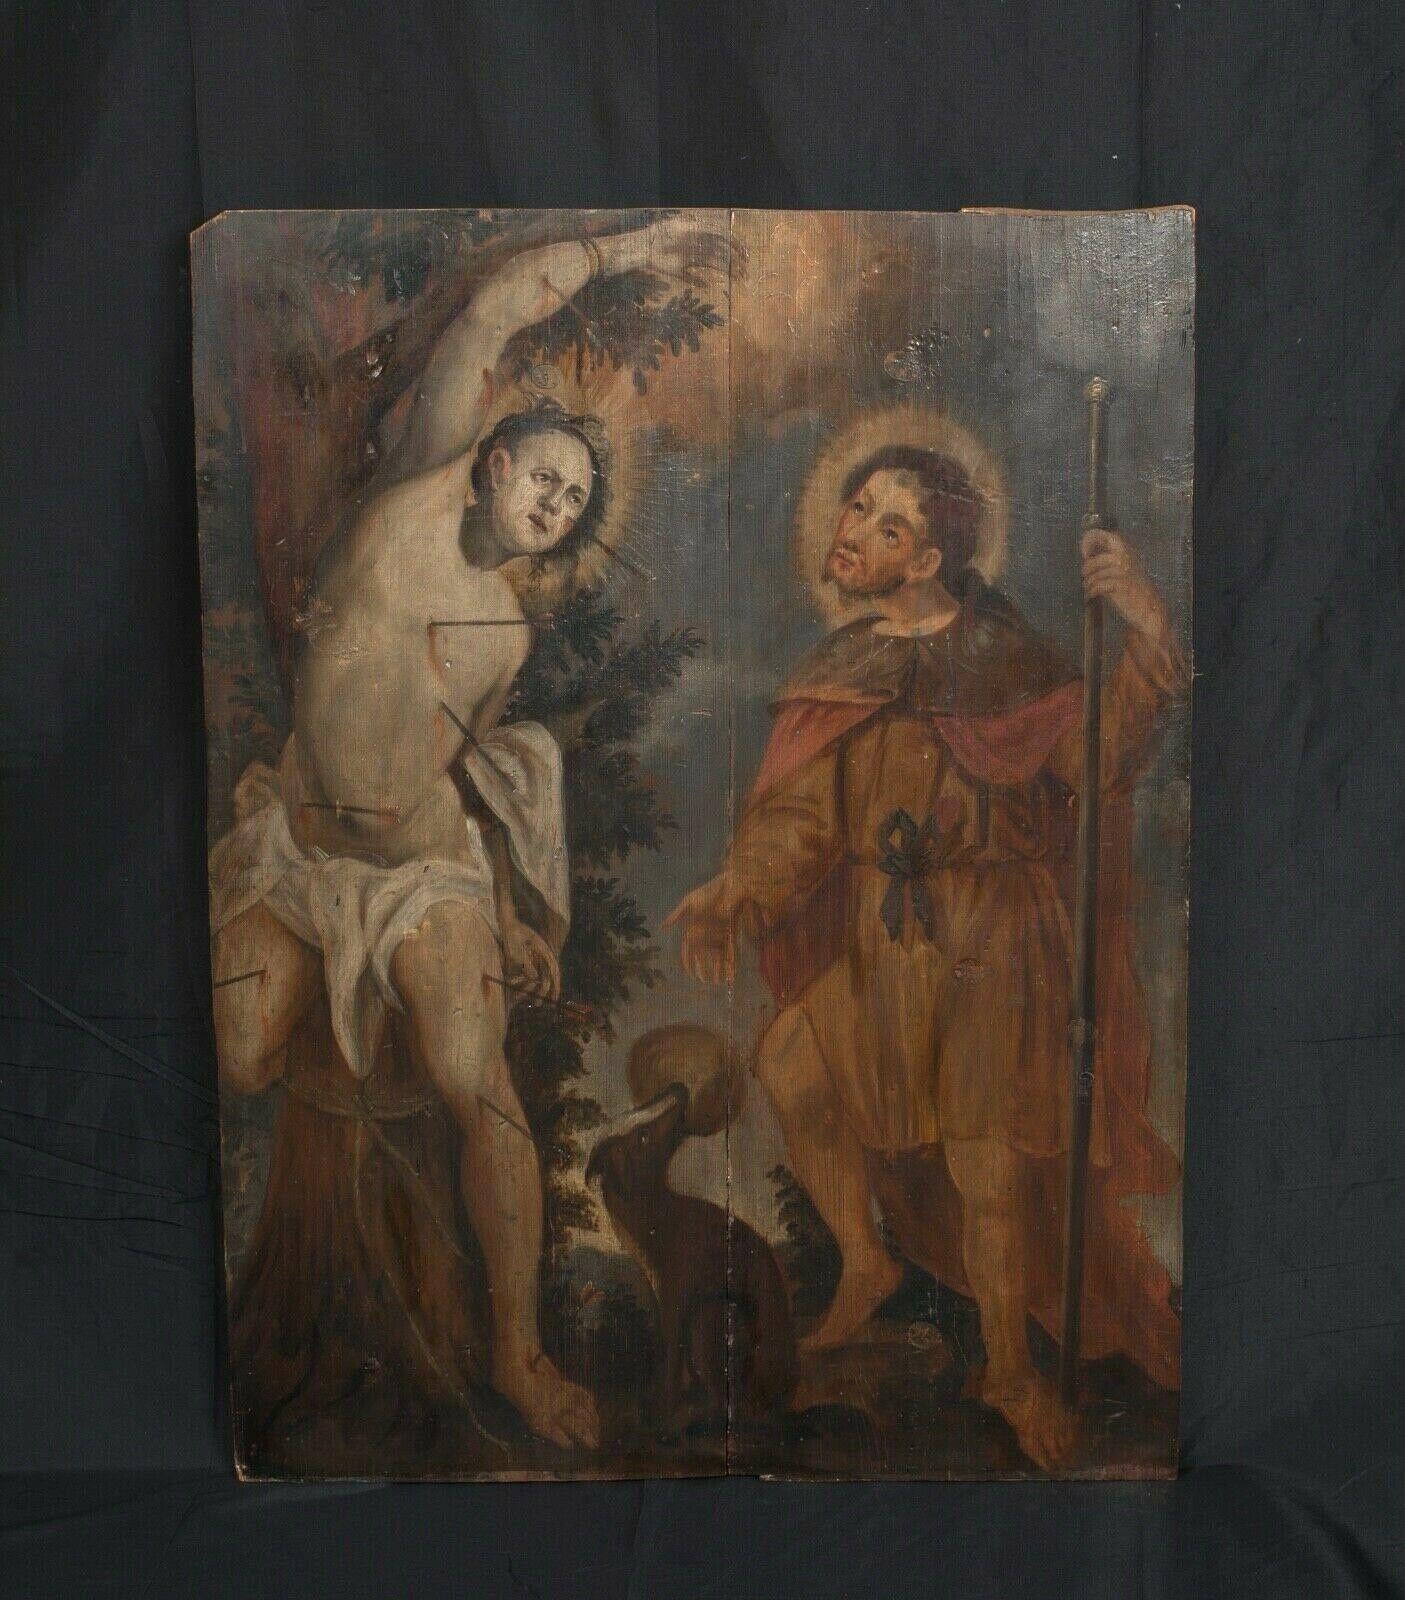 Saint Sebastian & Saint Roch, 16th Century - Flemish School - Painting by Unknown